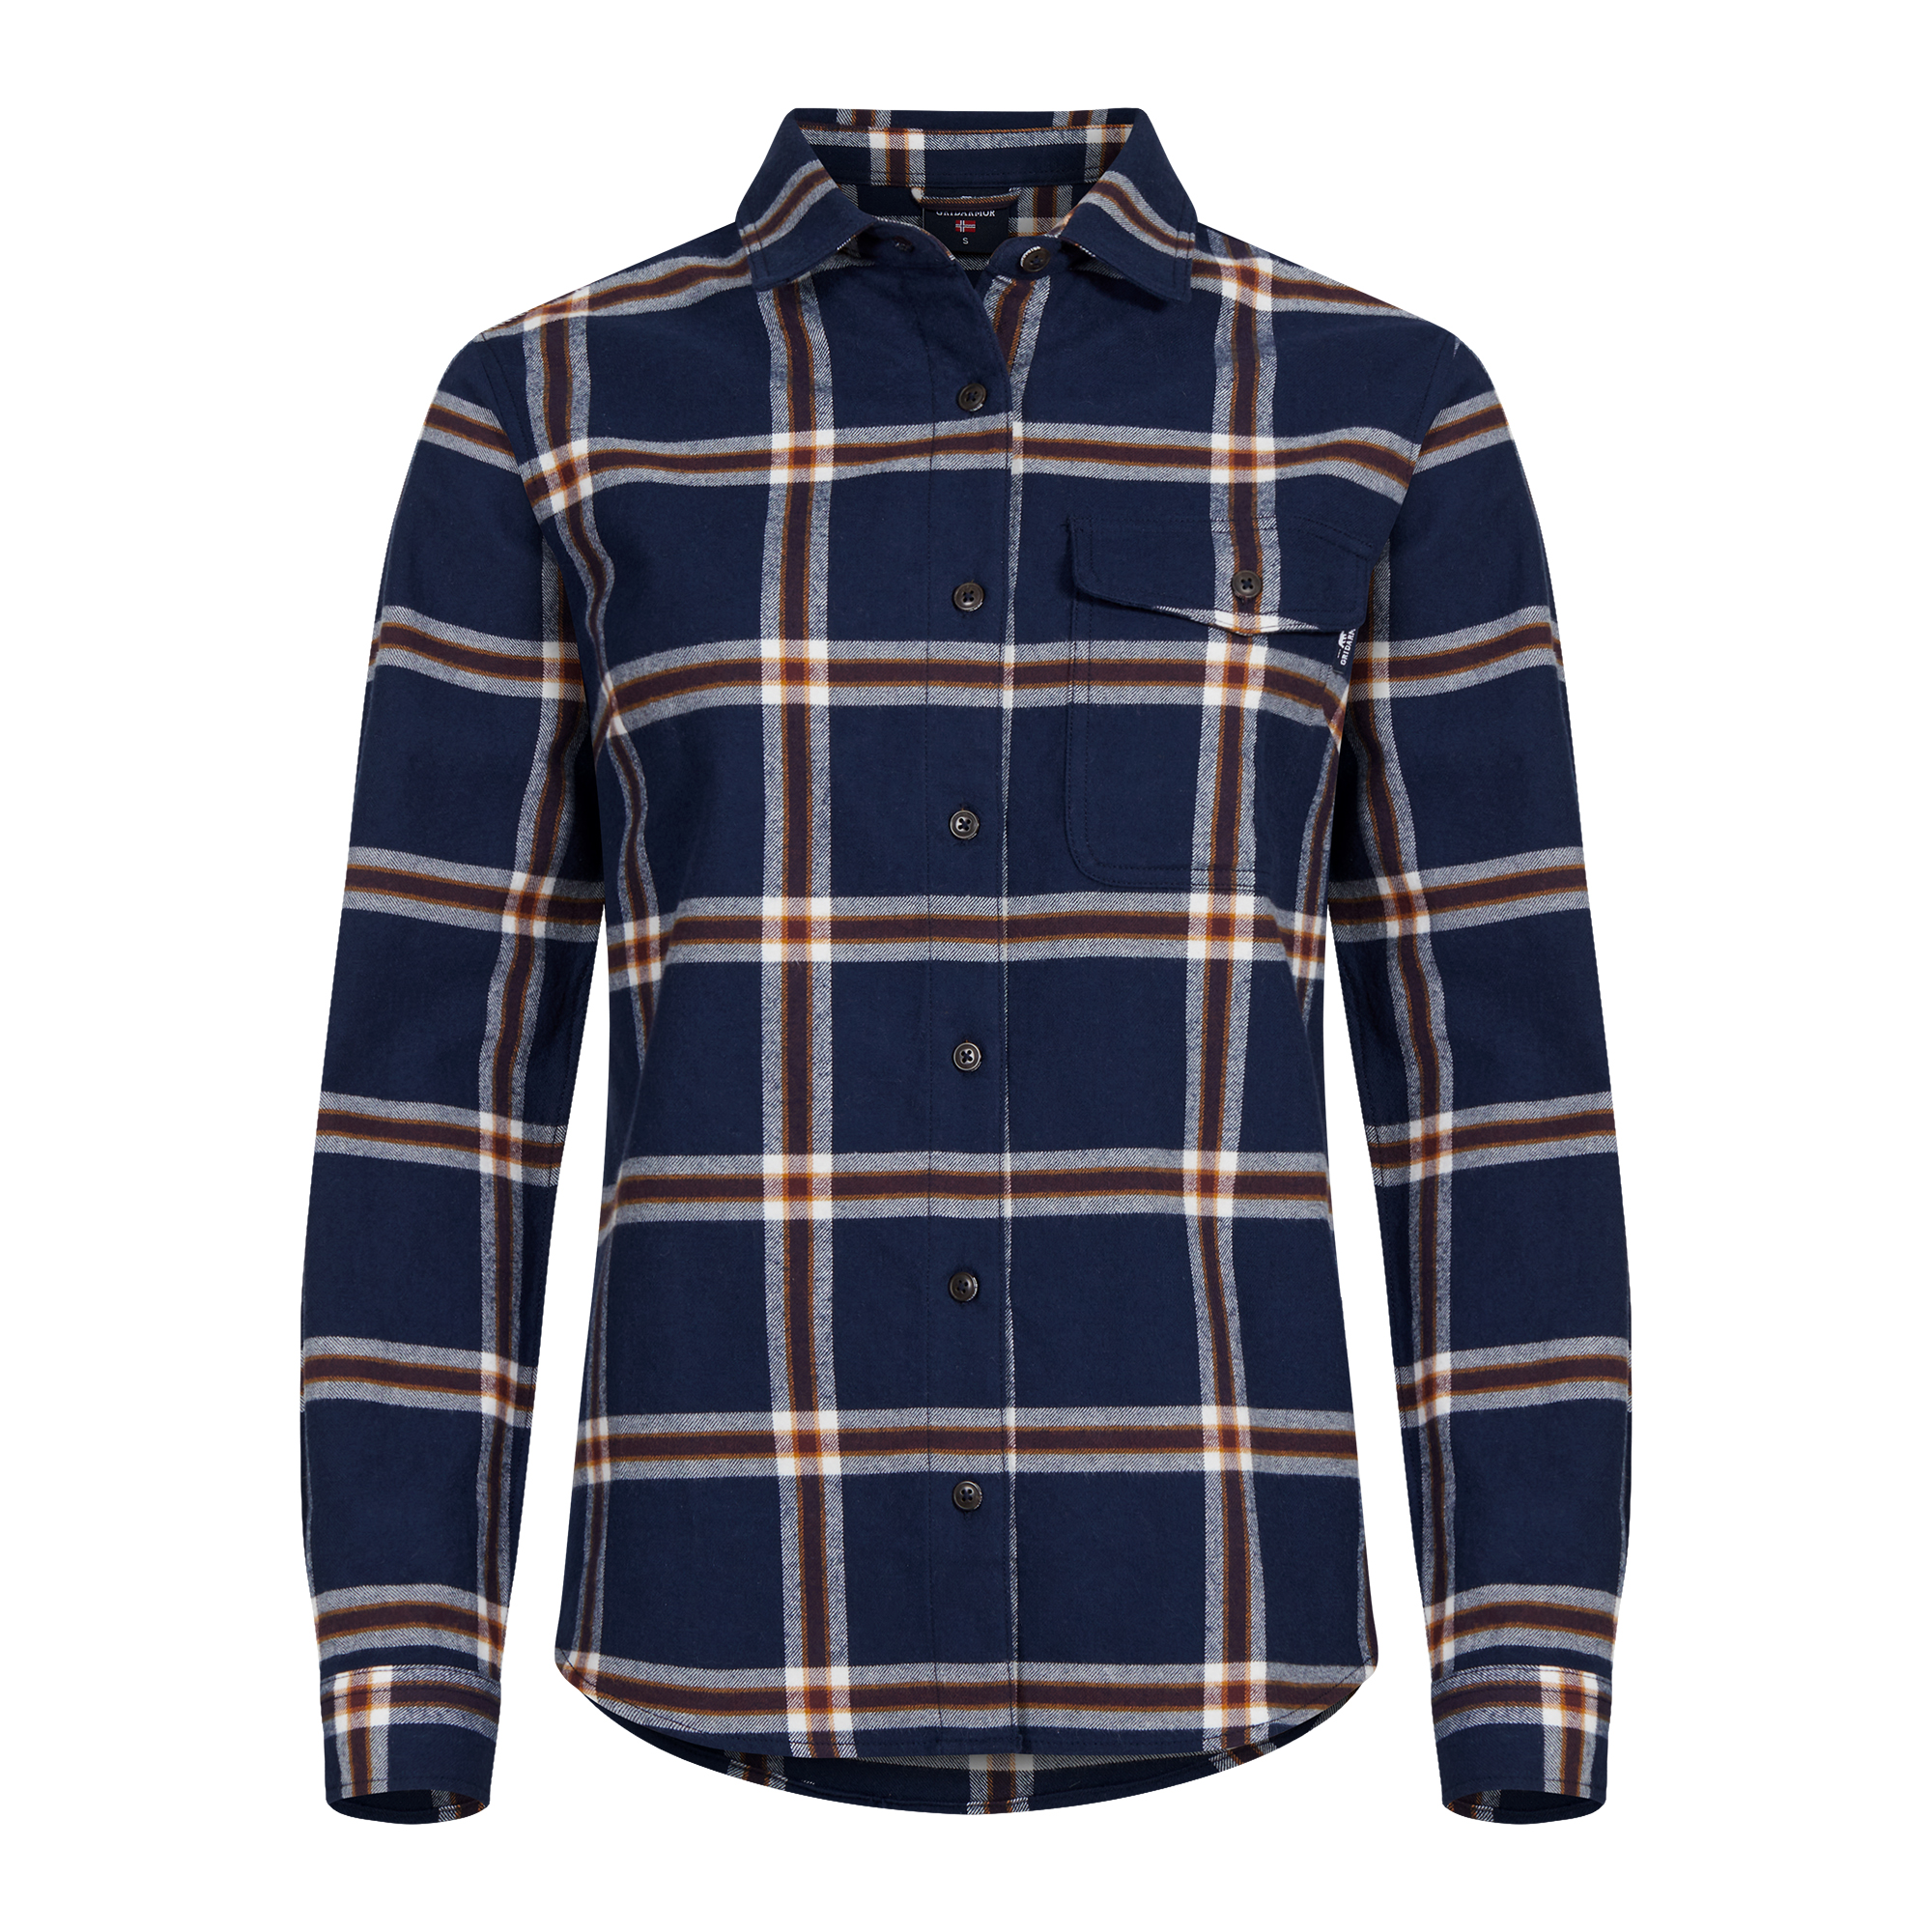 Gridarmor Women’s Dale Flannel Shirt Navy Blazer